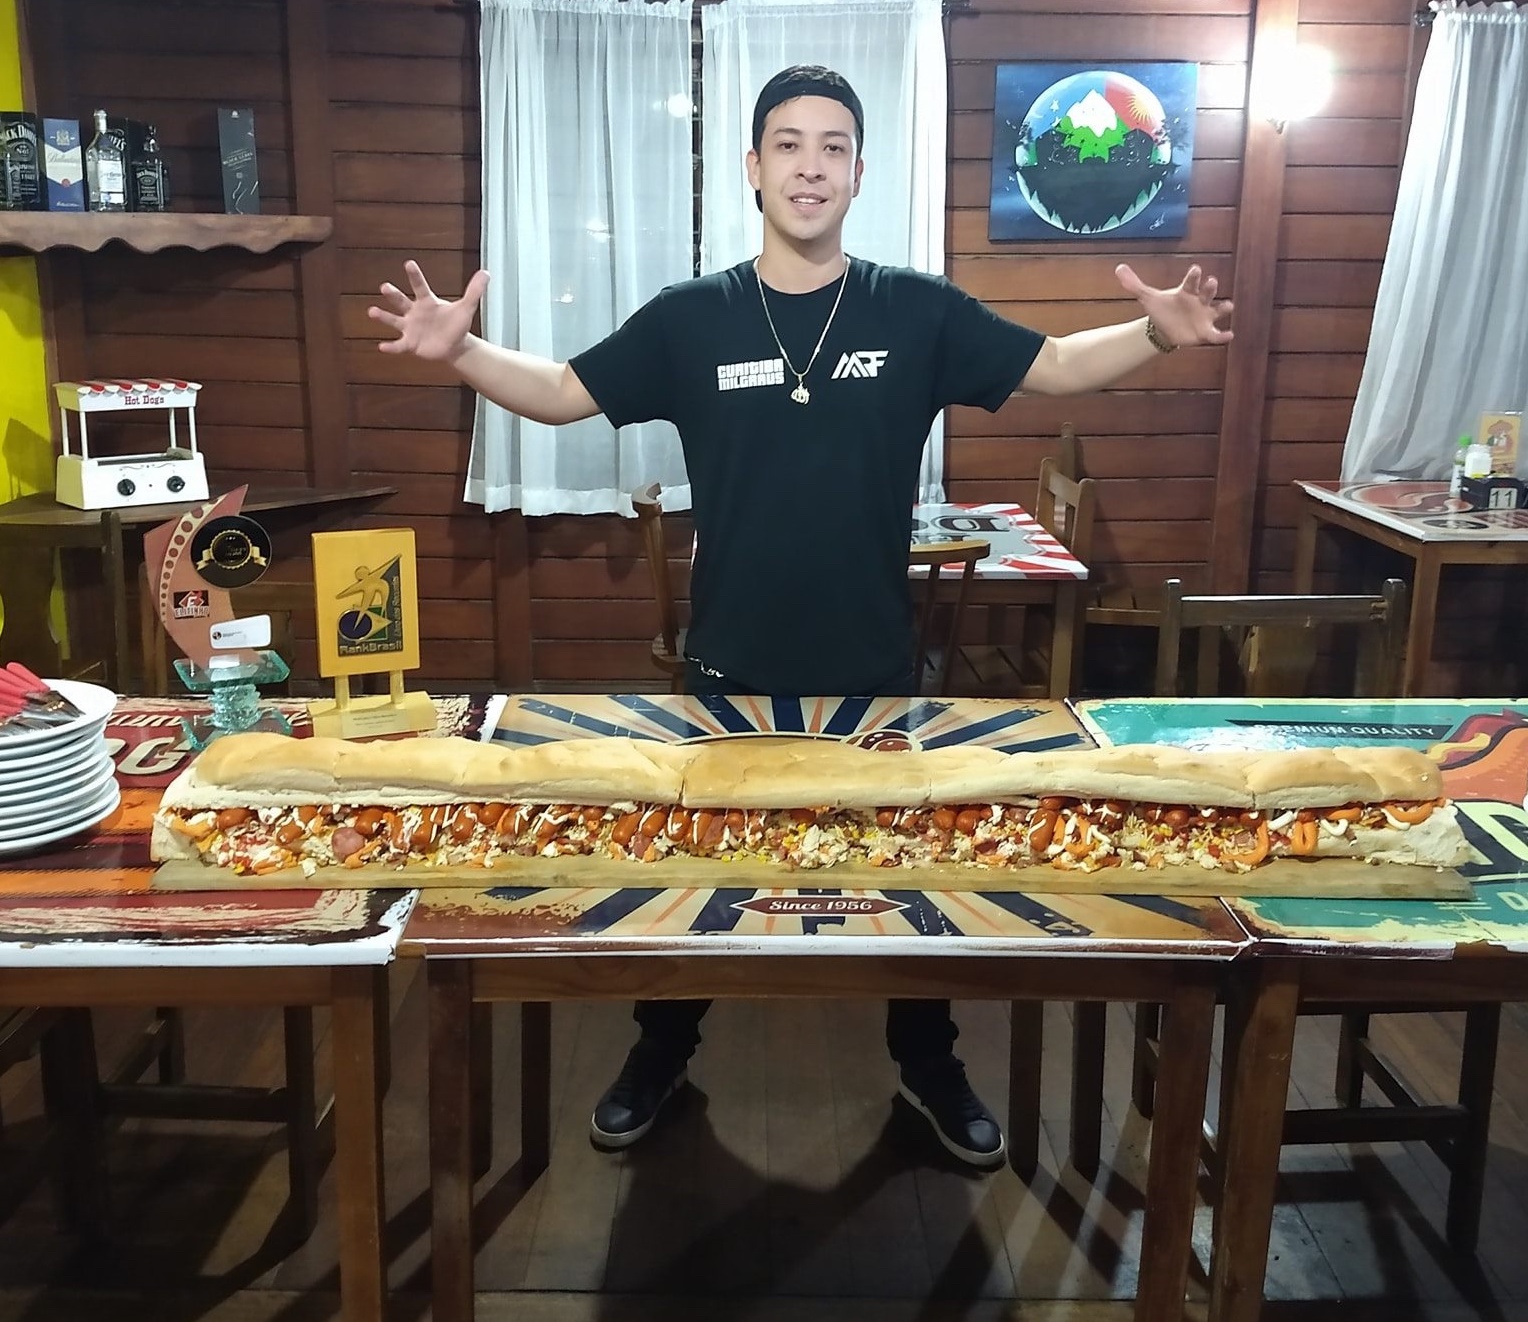 Hot dog de 1,5m